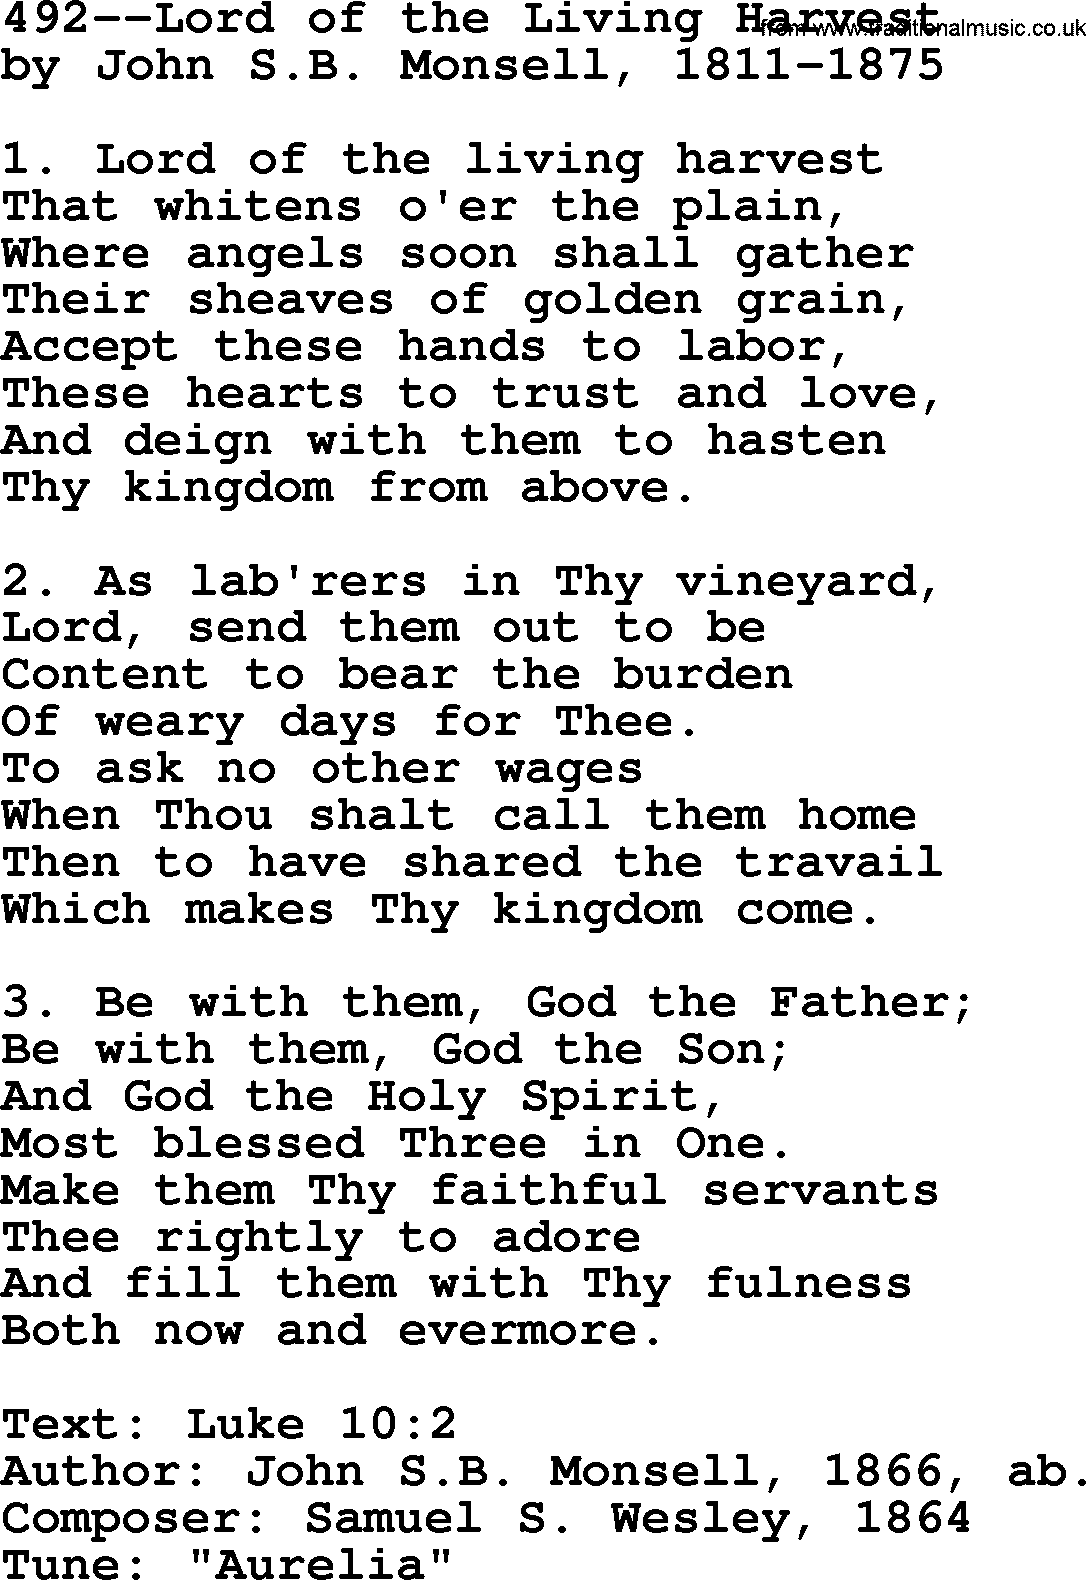 Lutheran Hymn: 492--Lord of the Living Harvest.txt lyrics with PDF